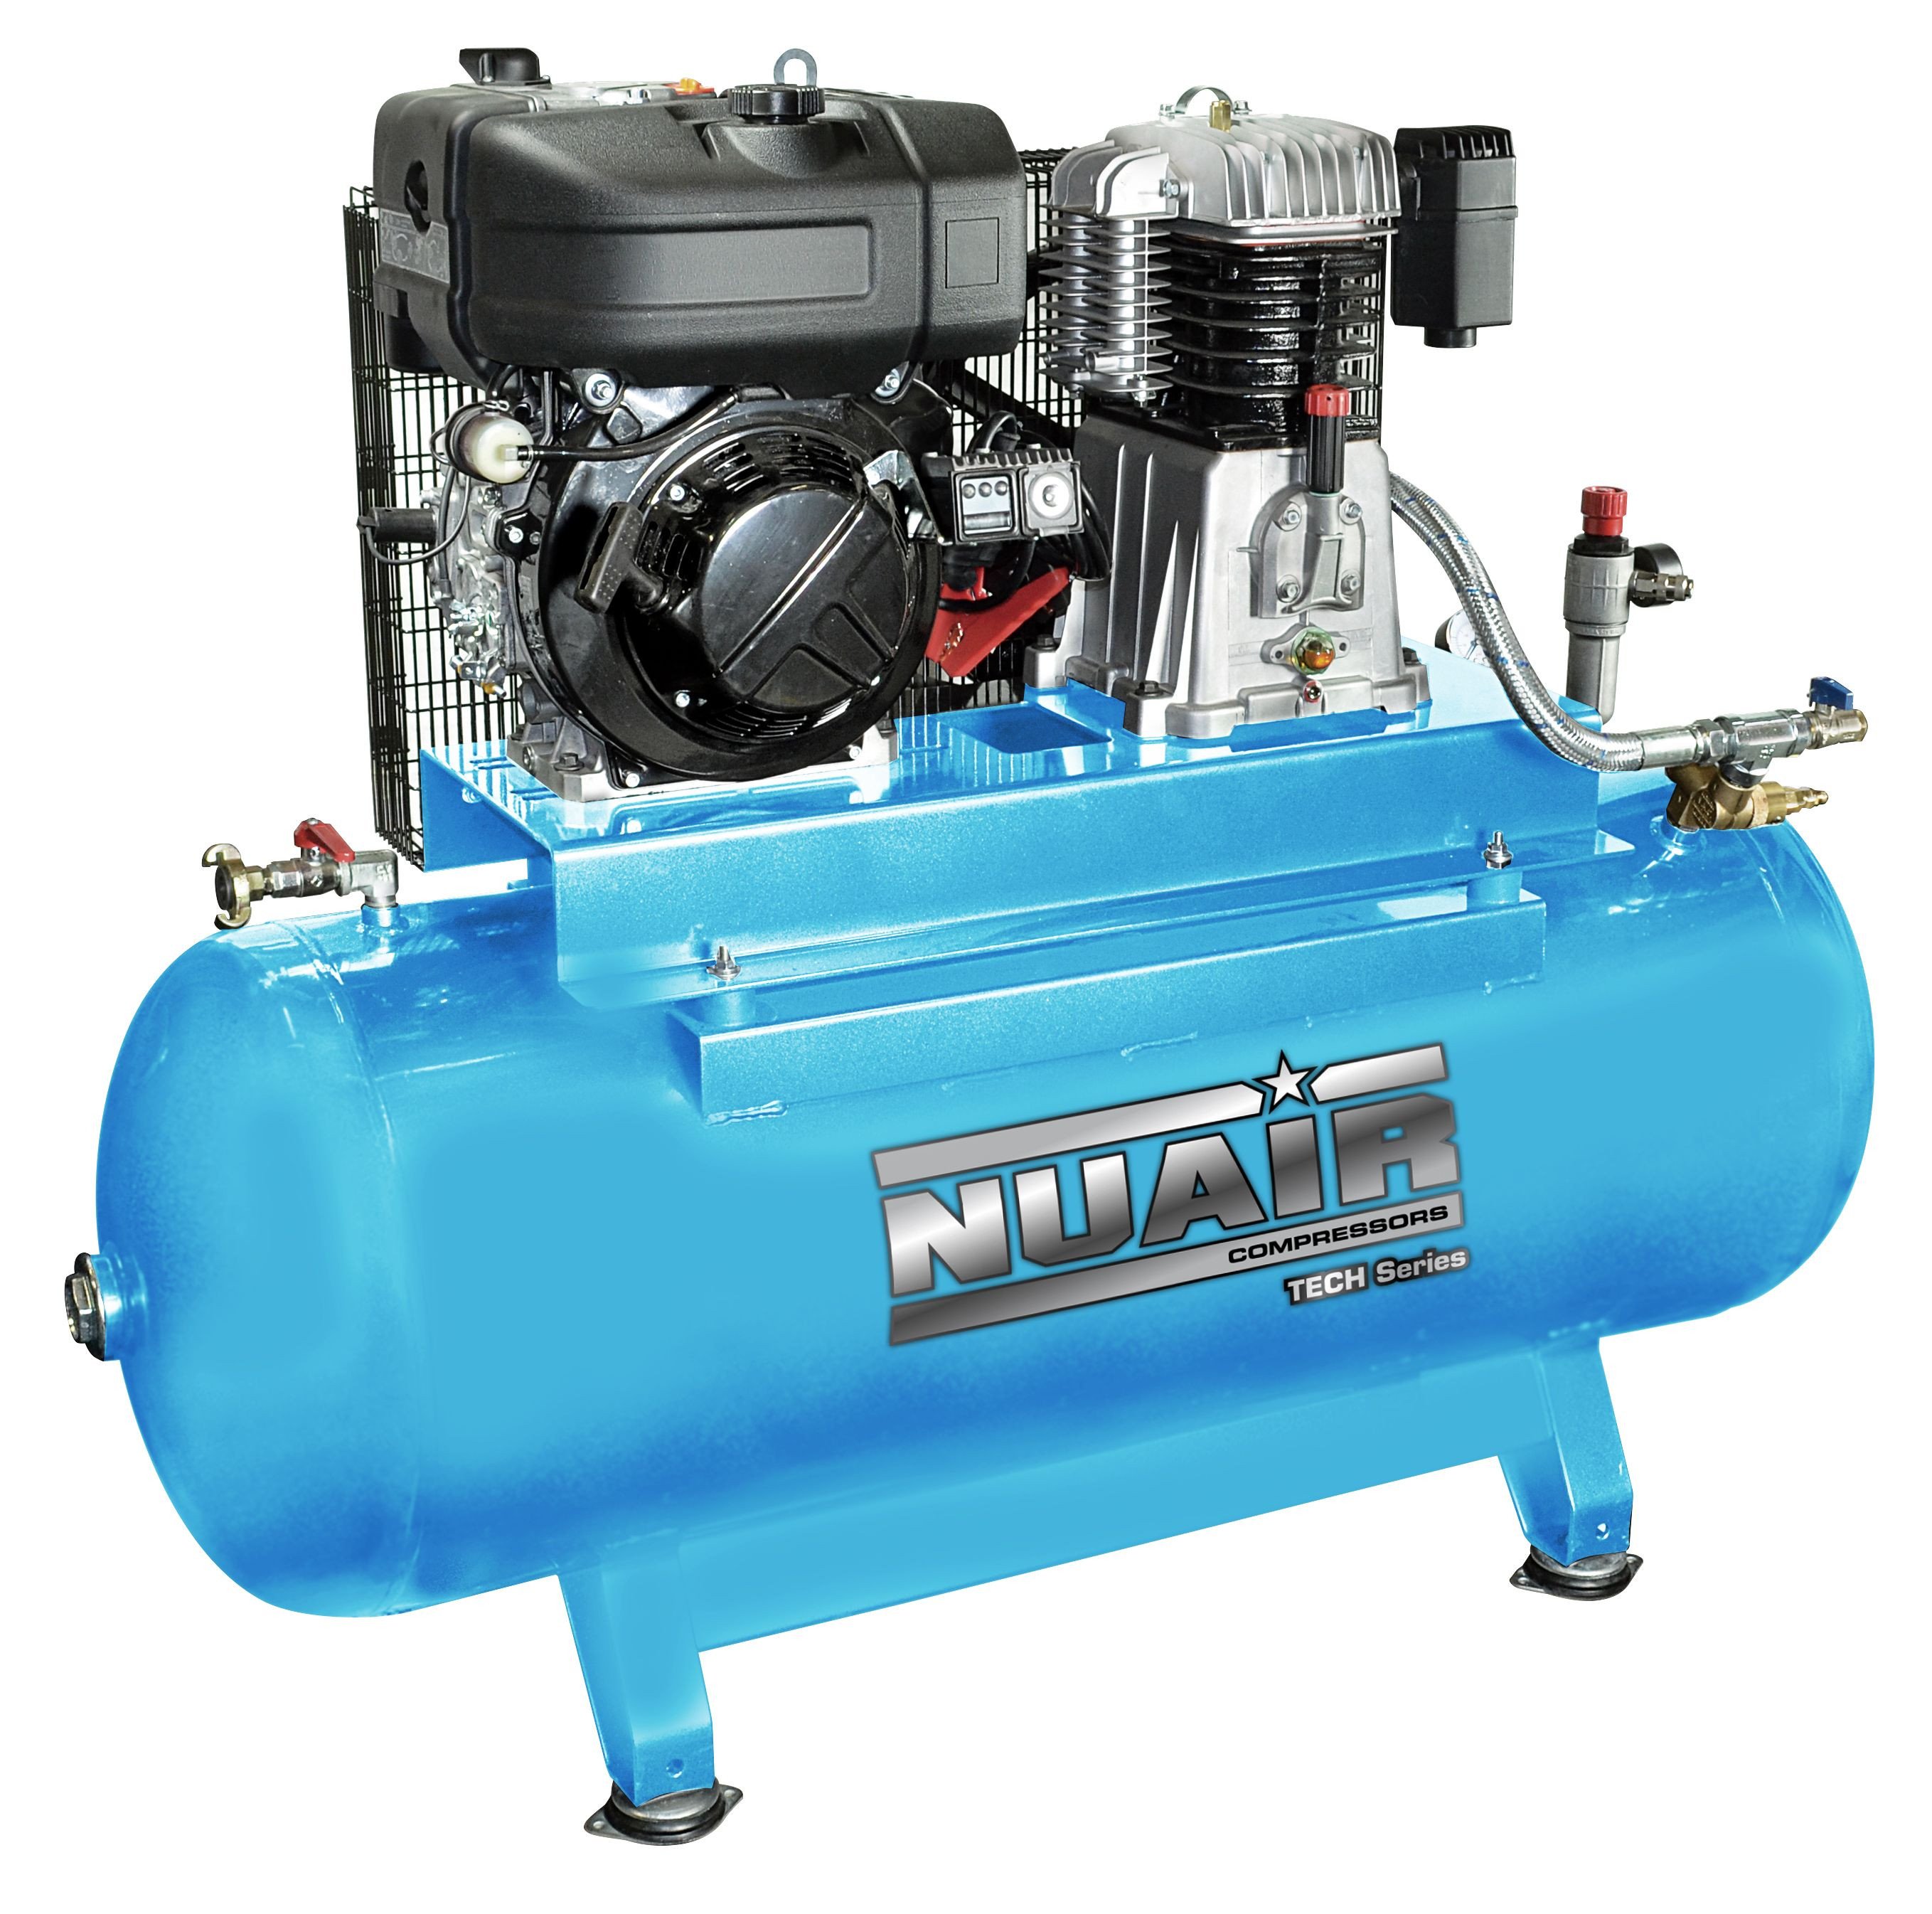 Nuair 270升专业/ Lombardini柴油带传动空气压缩机- 33.3 CFM 10马力